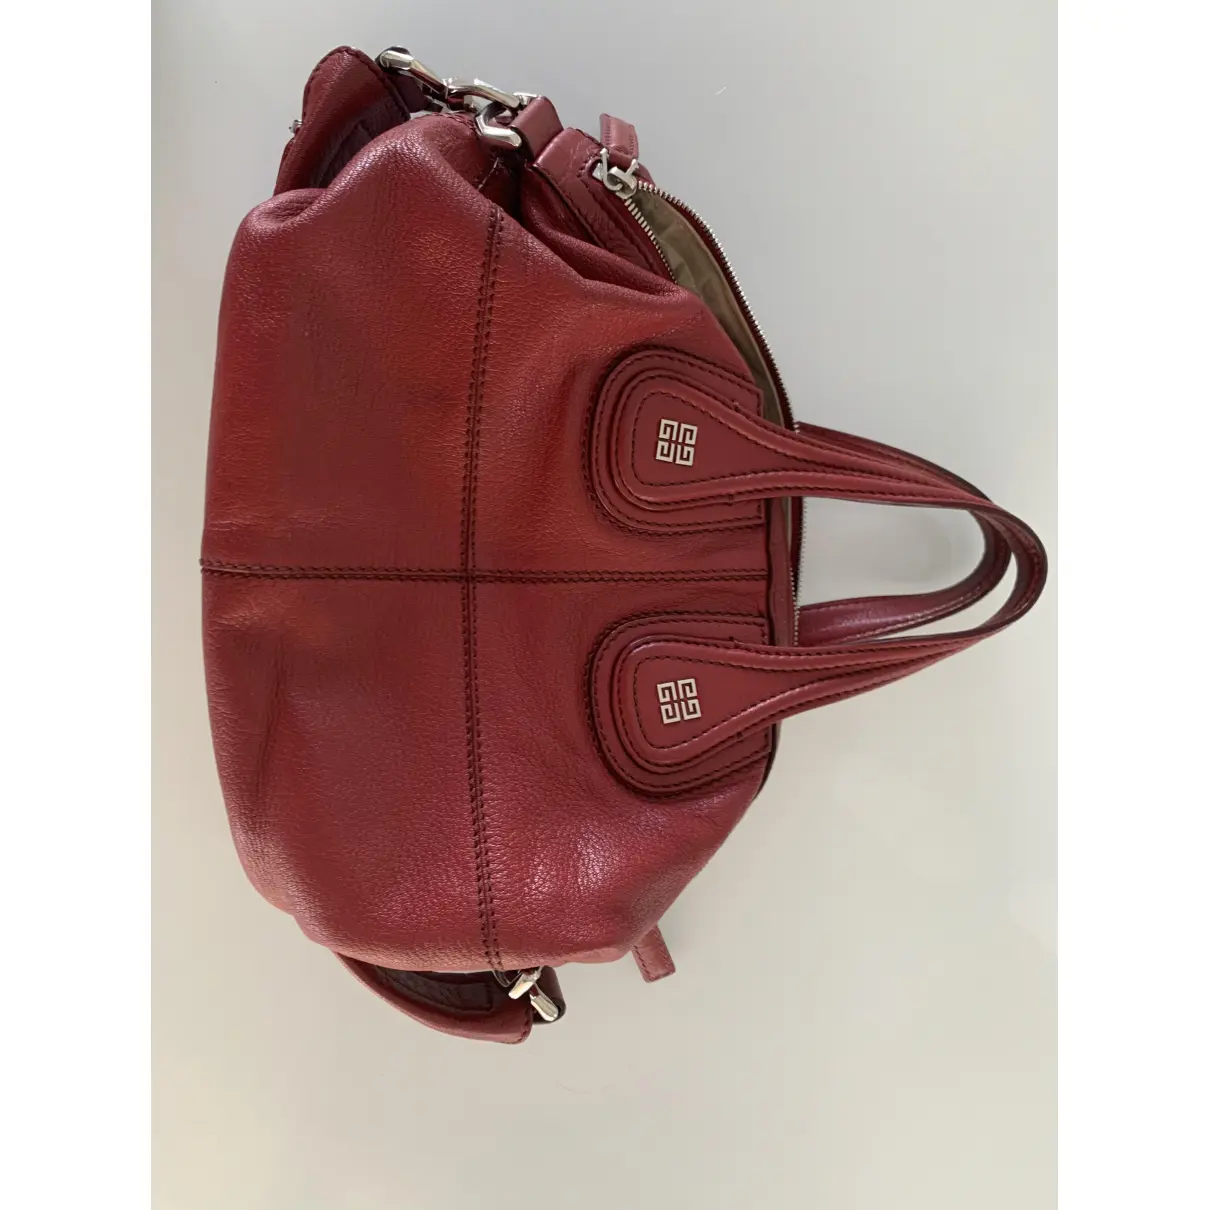 Buy Givenchy Nightingale leather handbag online